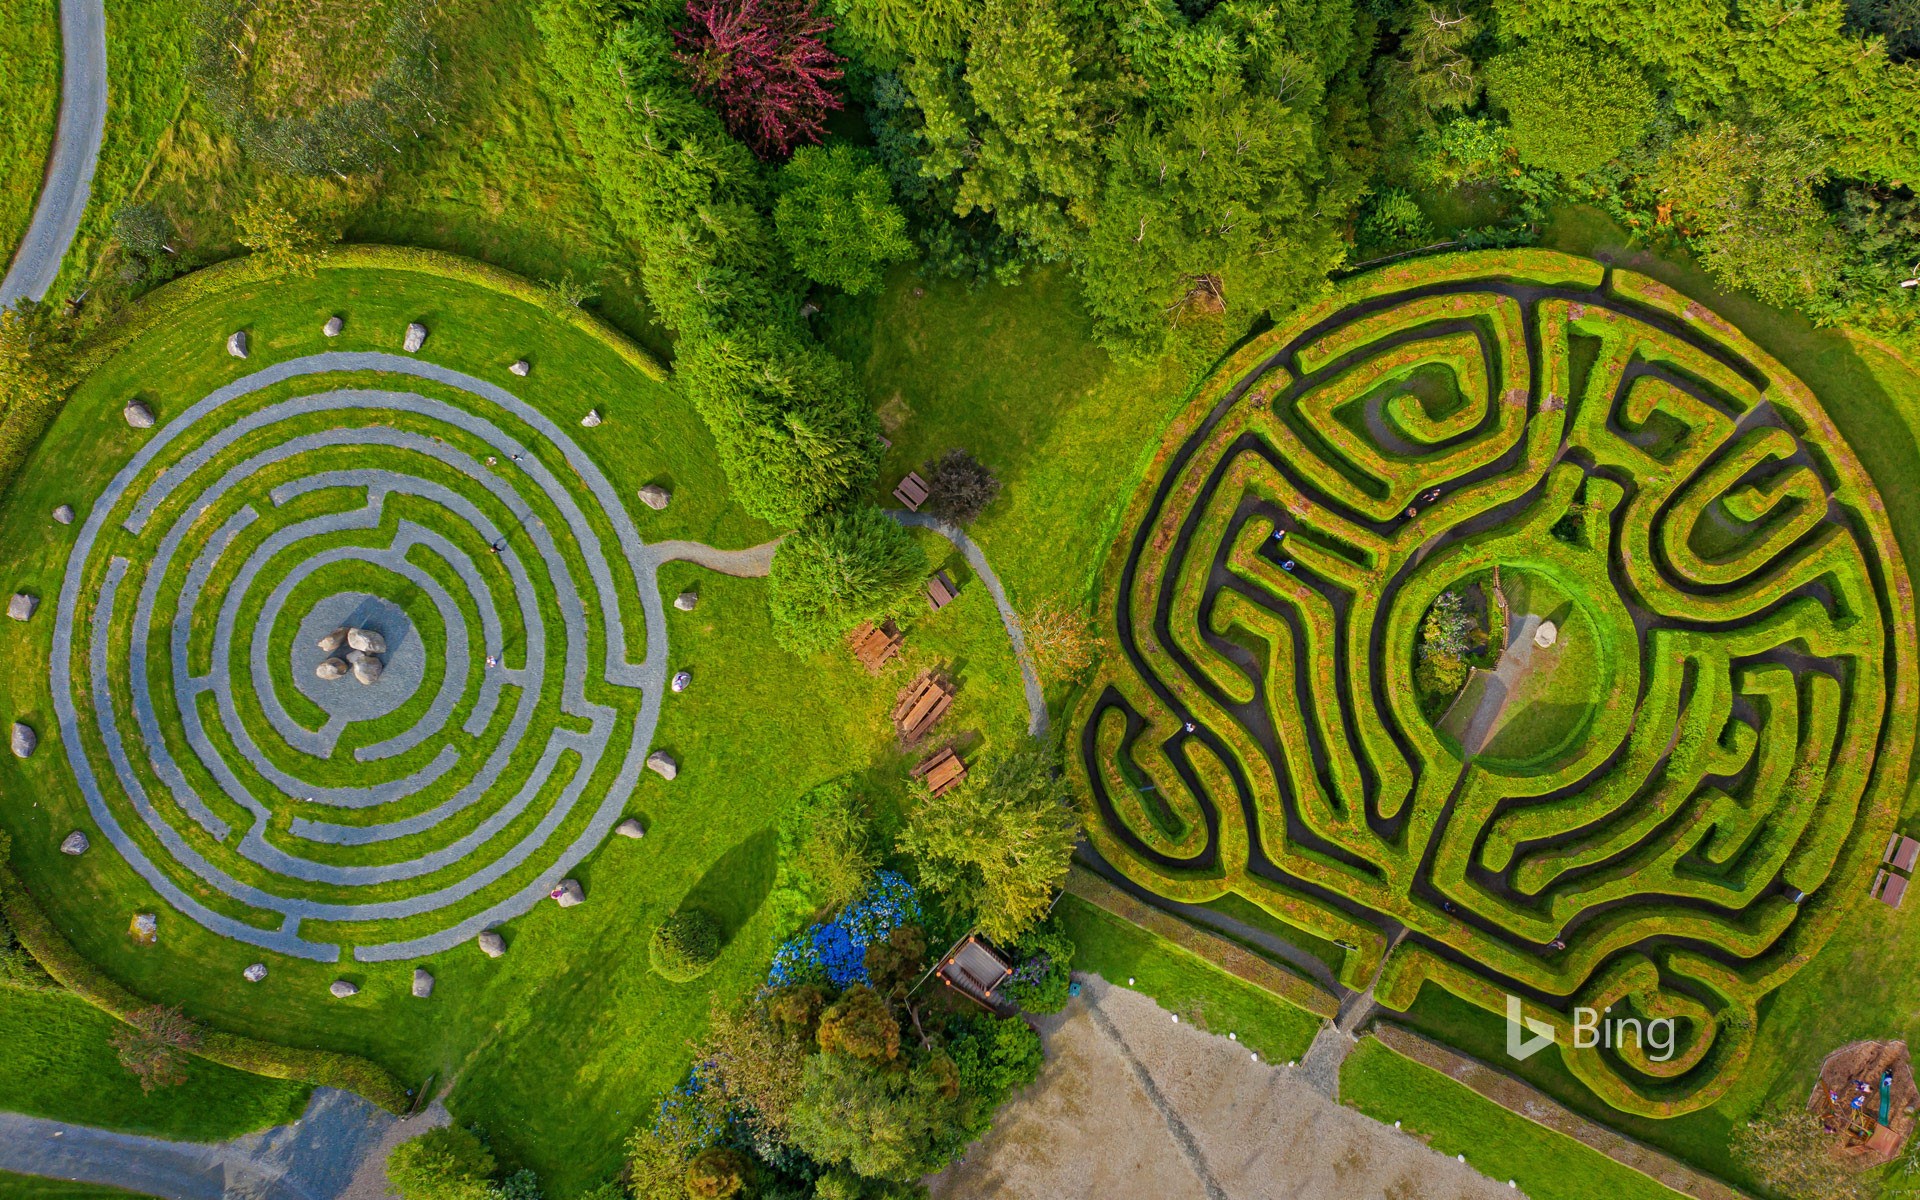 Greenan Maze in County Wicklow, Ireland